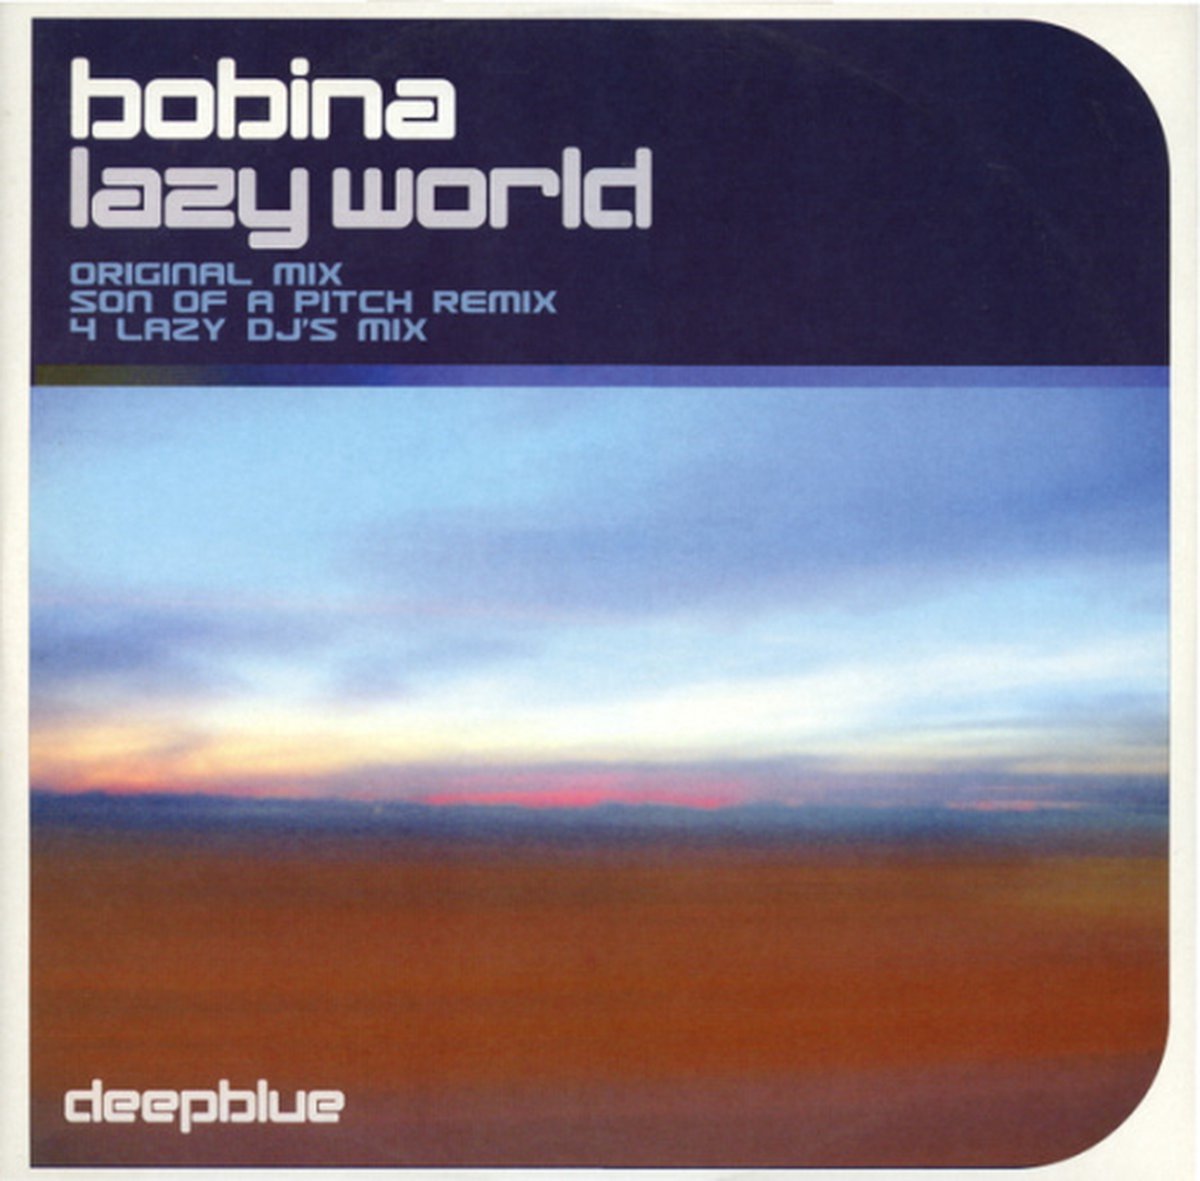 Lazy World - Bobina